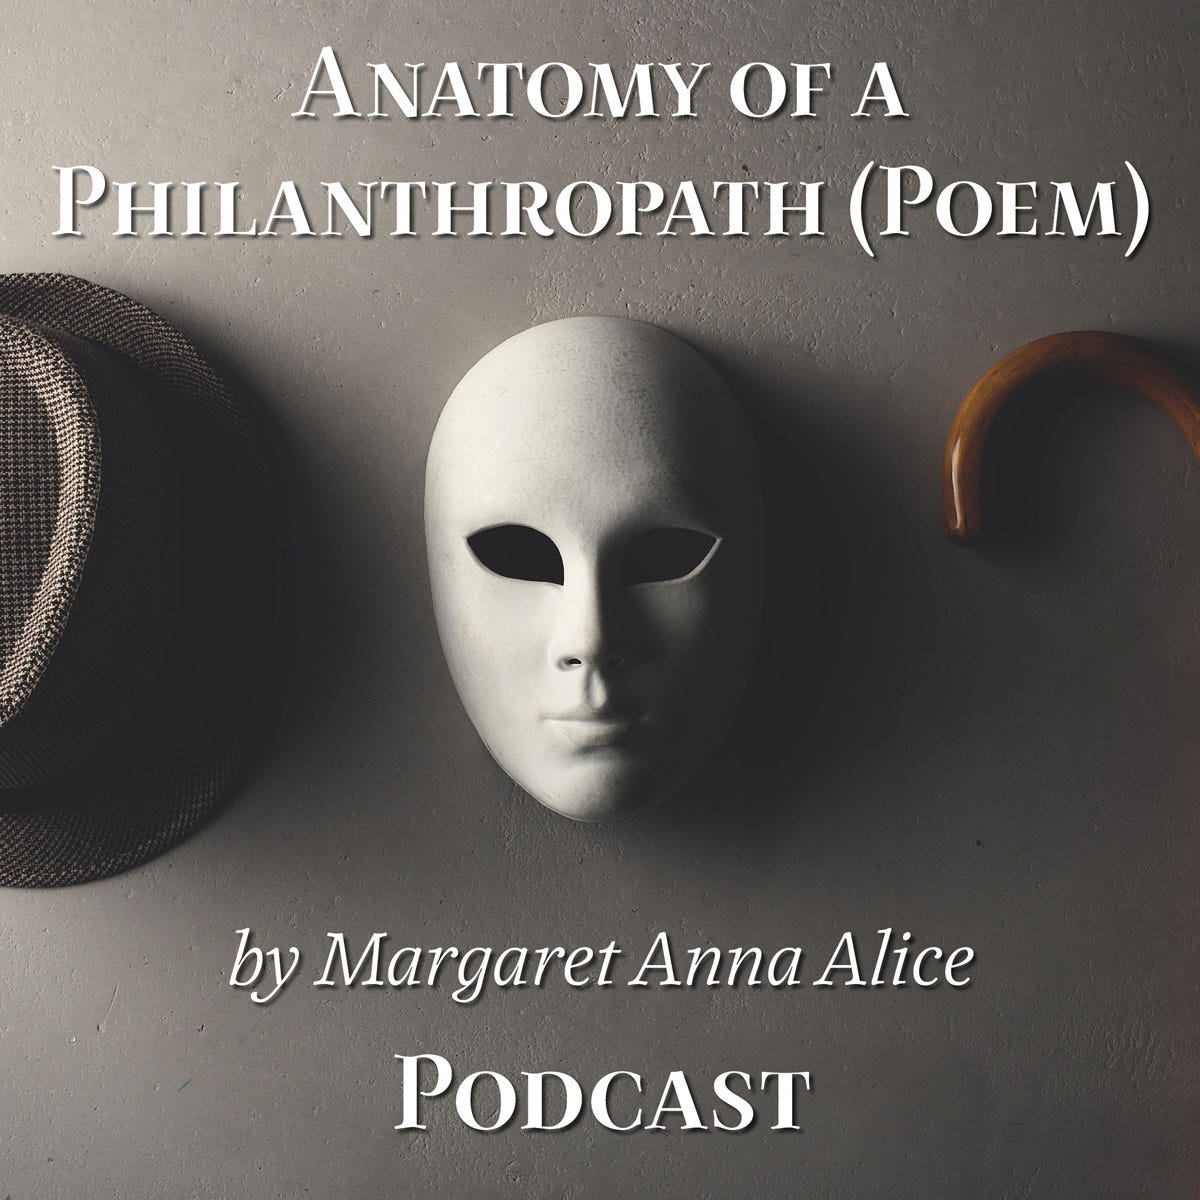 Anatomy of a Philanthropath (Poem) Podcast Cover Artwork